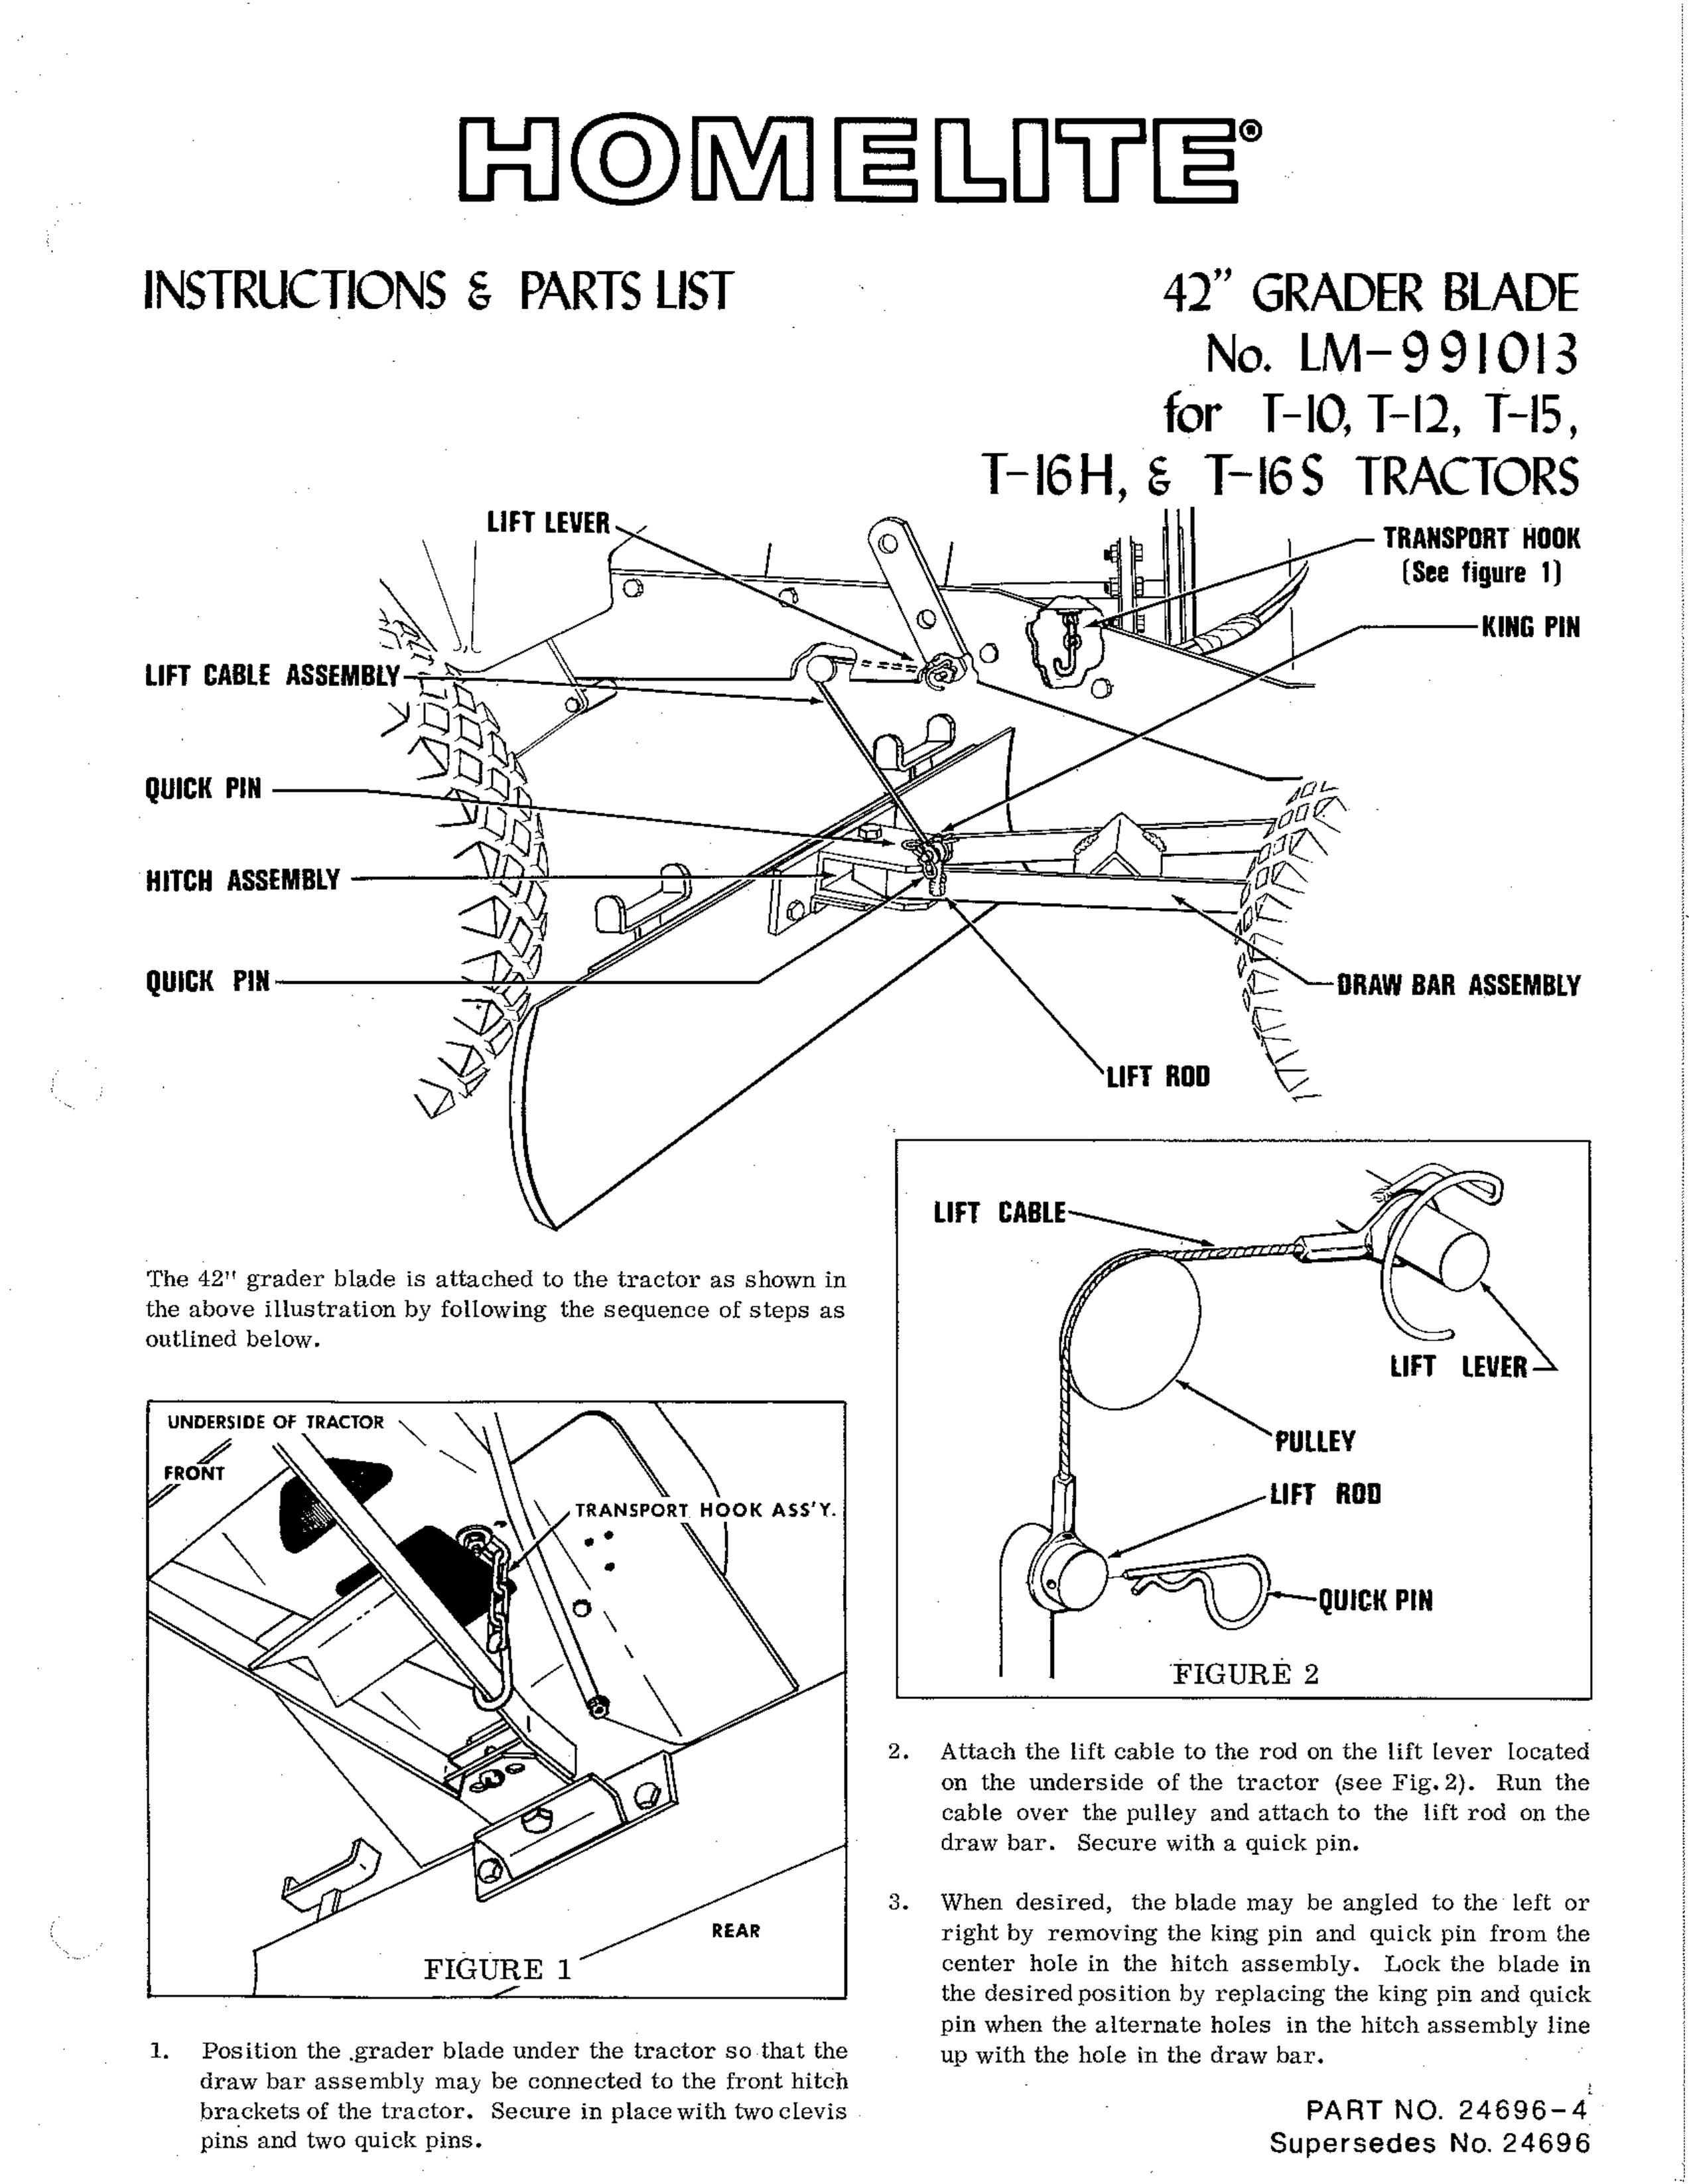 Homelite LM-991013 Lawn Mower User Manual